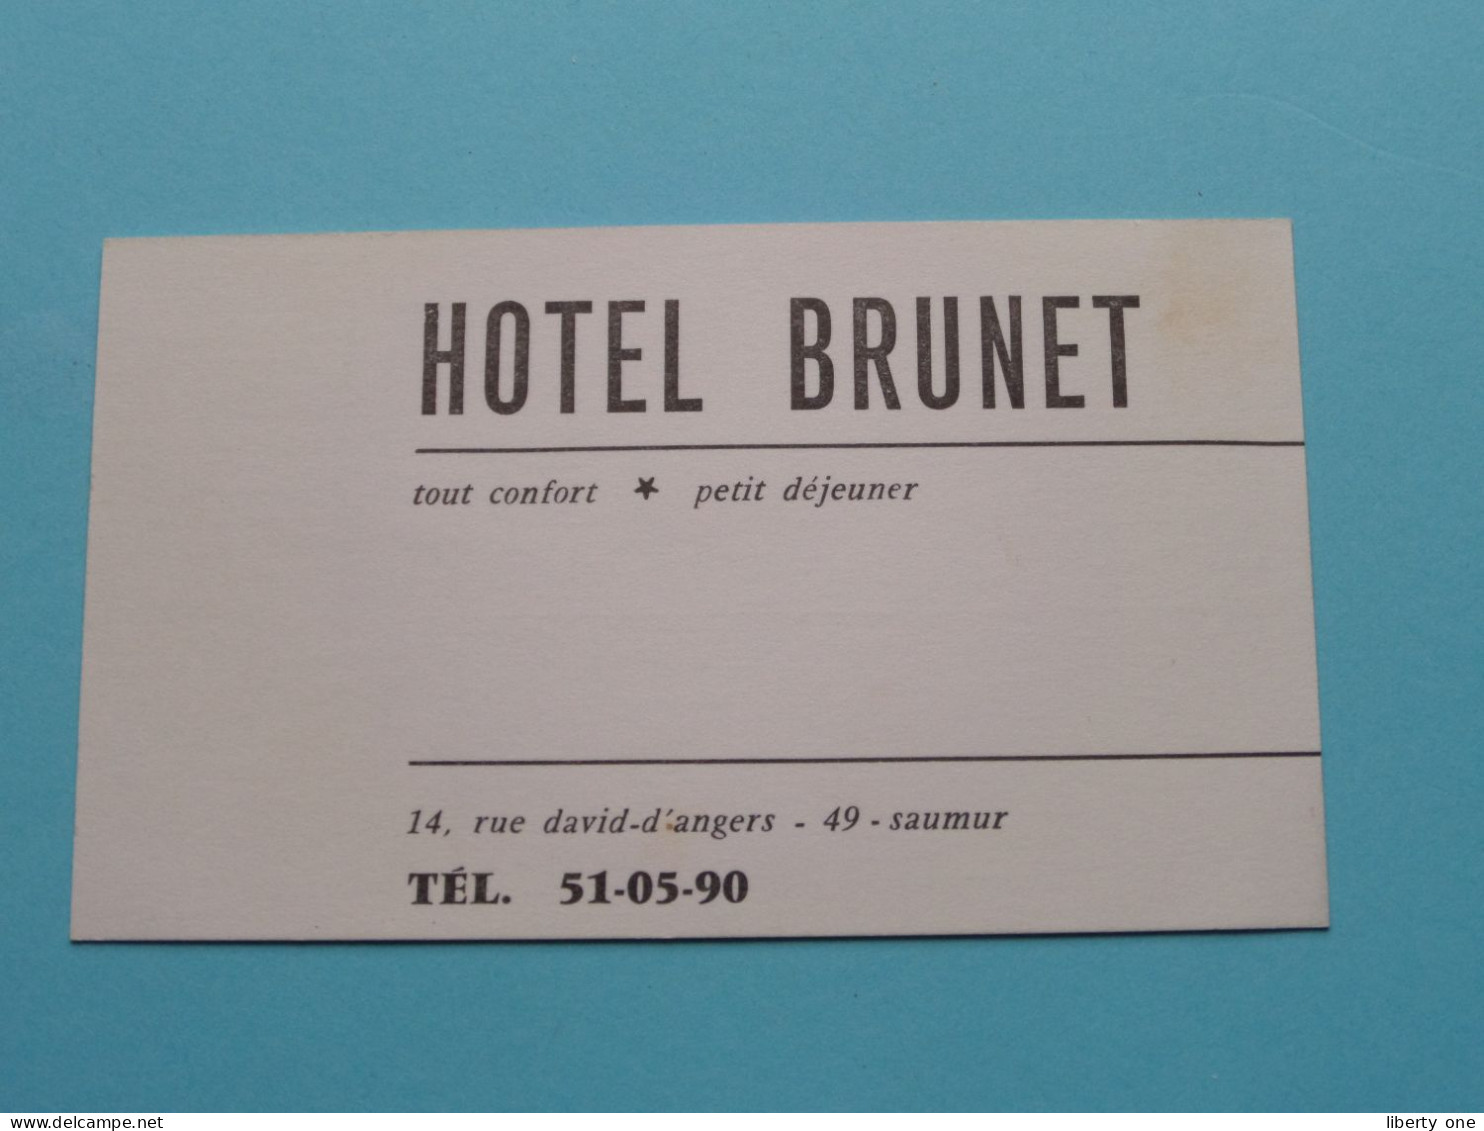 Hotel BRUNET > SAUMUR ( Zie / Voir SCAN ) La FRANCE ! - Visitekaartjes